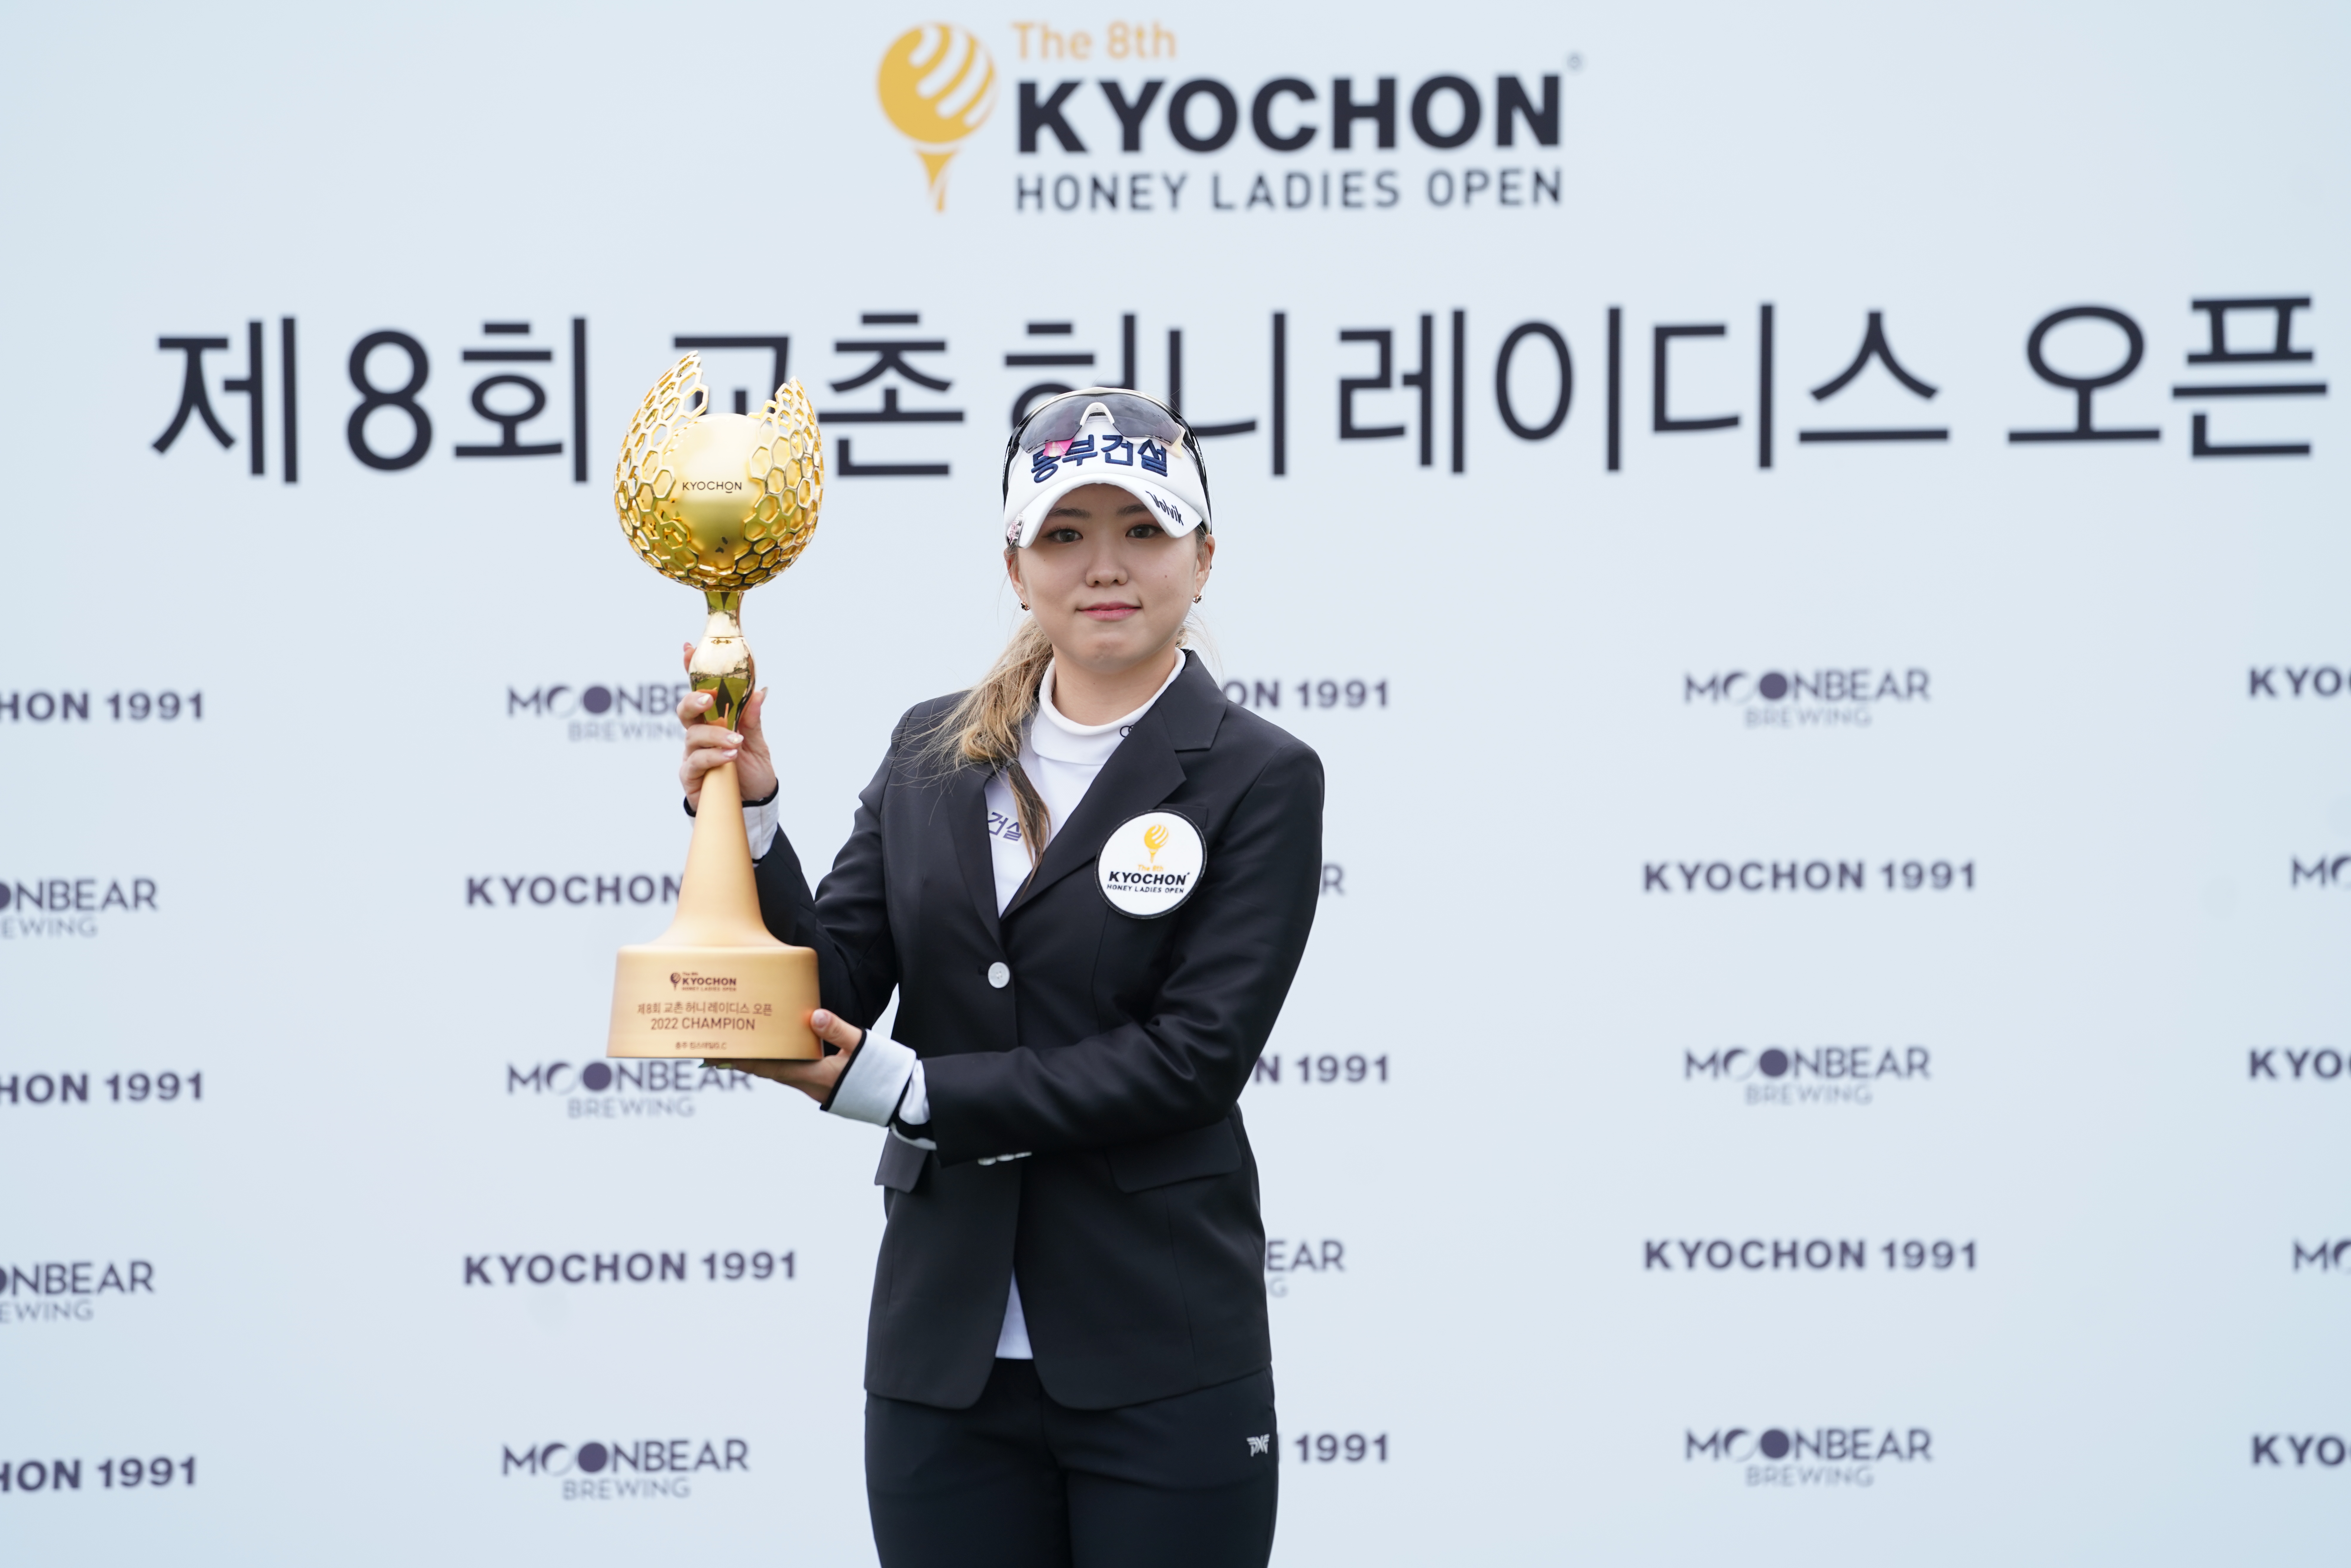 The winner of 8th Kyochon Honey Ladies Open